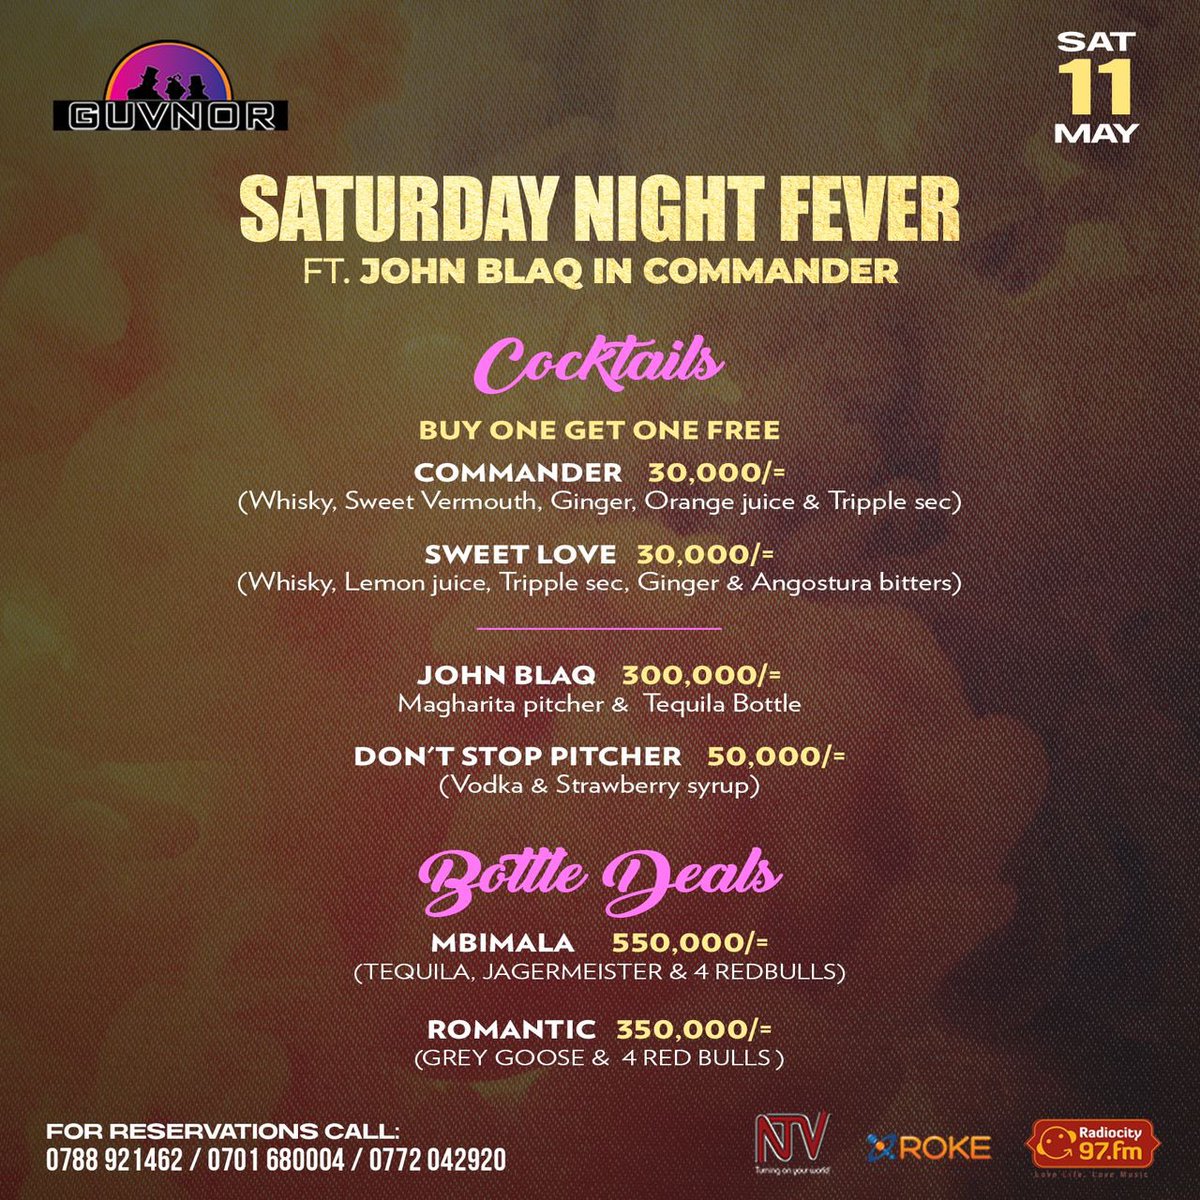 'Saturday night fever at Guvnor Uganda with the incredible@johnblaqi, @johnblaq, @naselow and @lynda_ddane Get ready to dance the night away and make unforgettable memories! #GuvnorUganda #JohnBlaq #SaturdayNightFever'